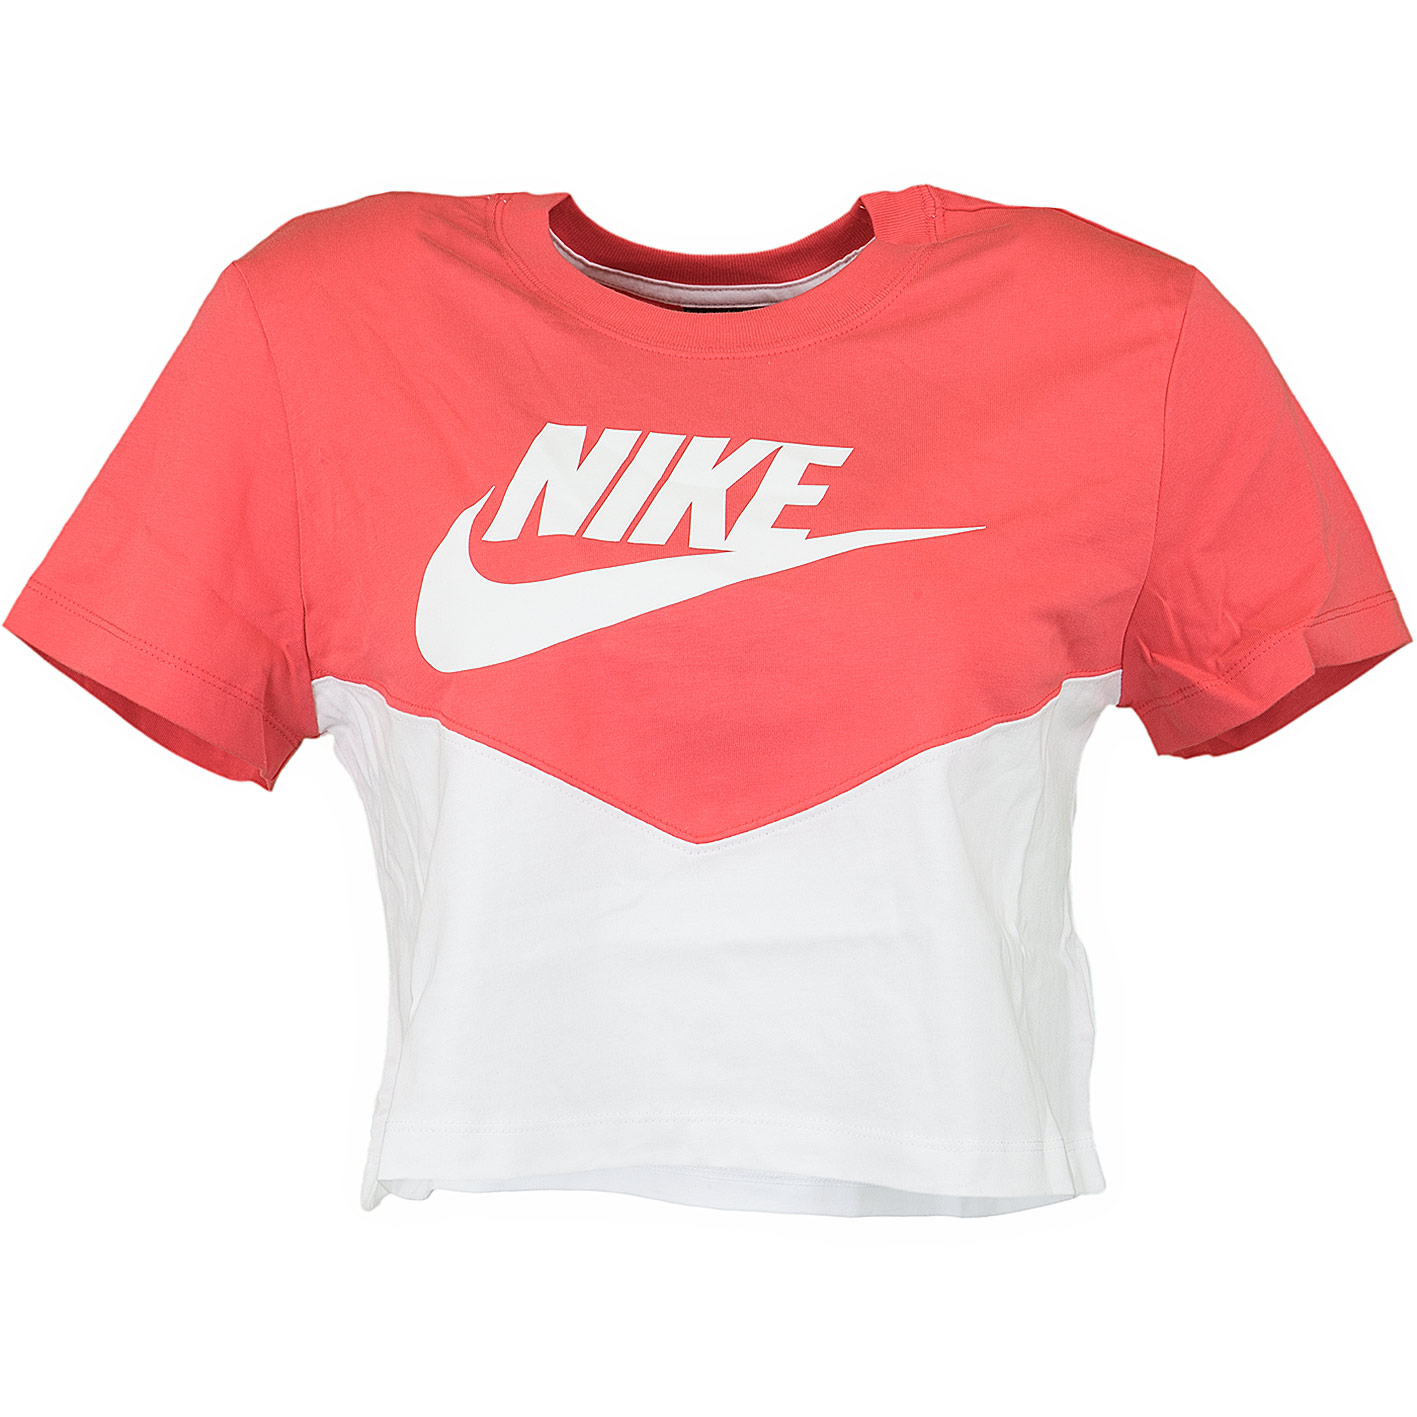 ☆ Nike Damen T-Shirt Heritage weiß/rot - hier bestellen!